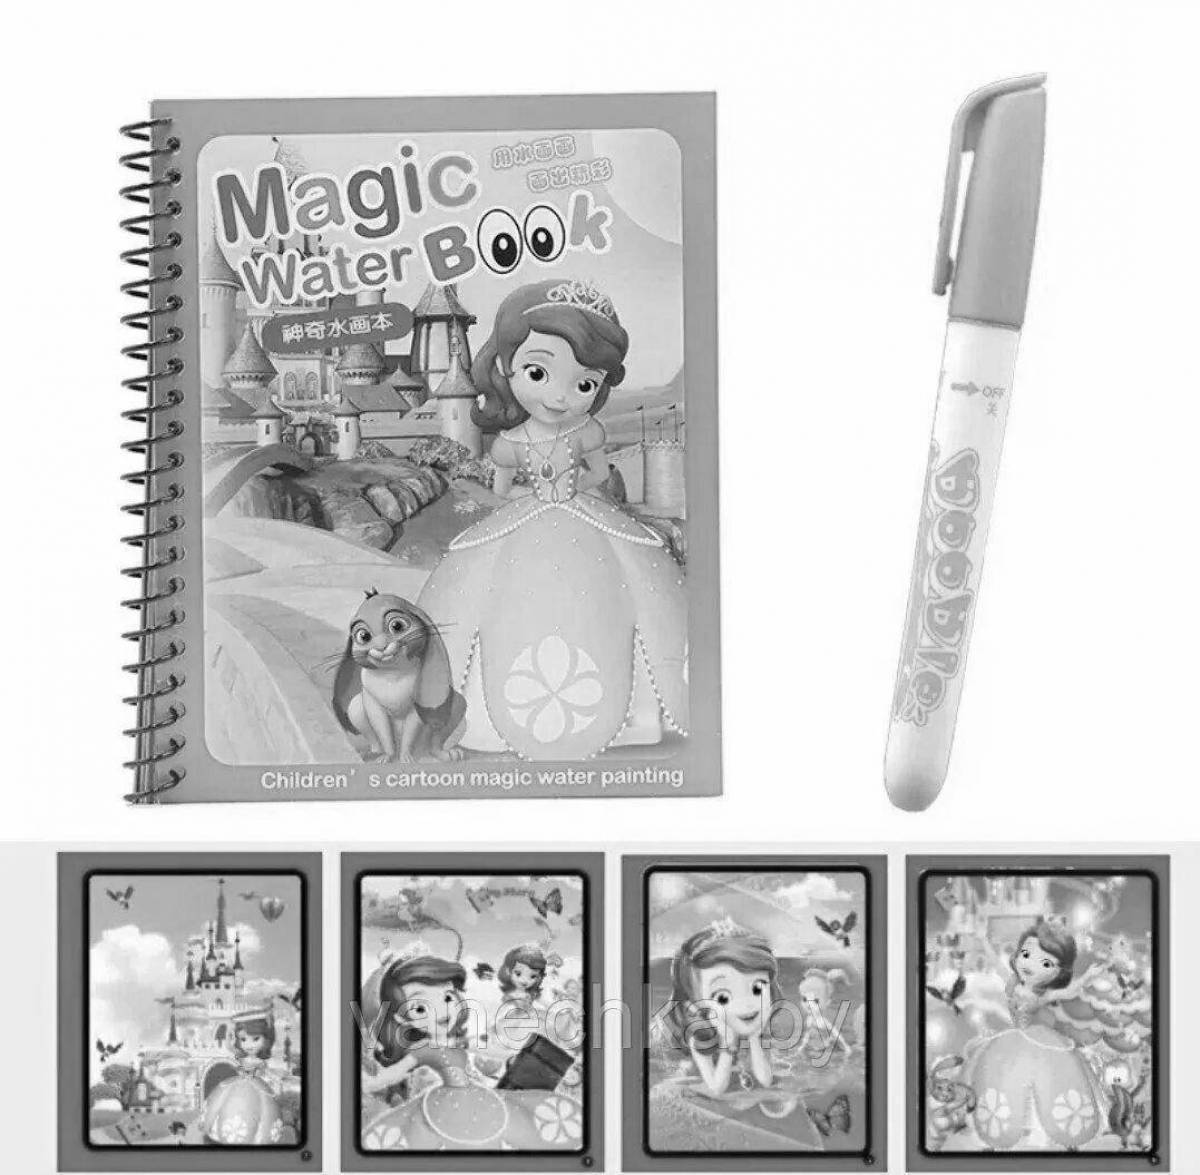 Enchanting coloring book magic water book